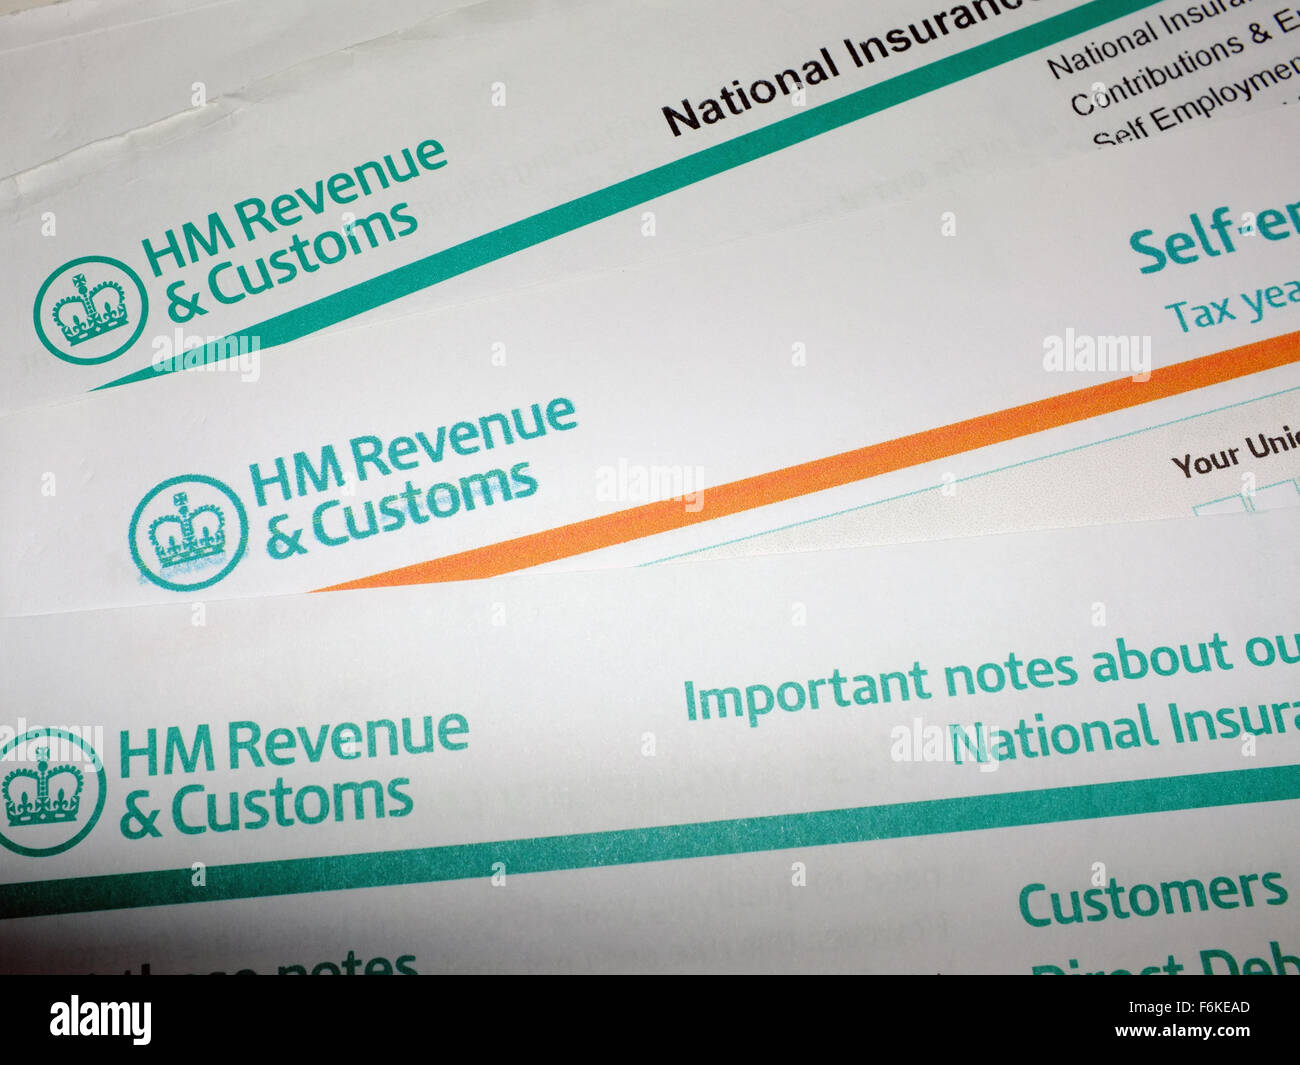 hm-revenue-customs-self-return-tax-paperwork-stock-photo-alamy